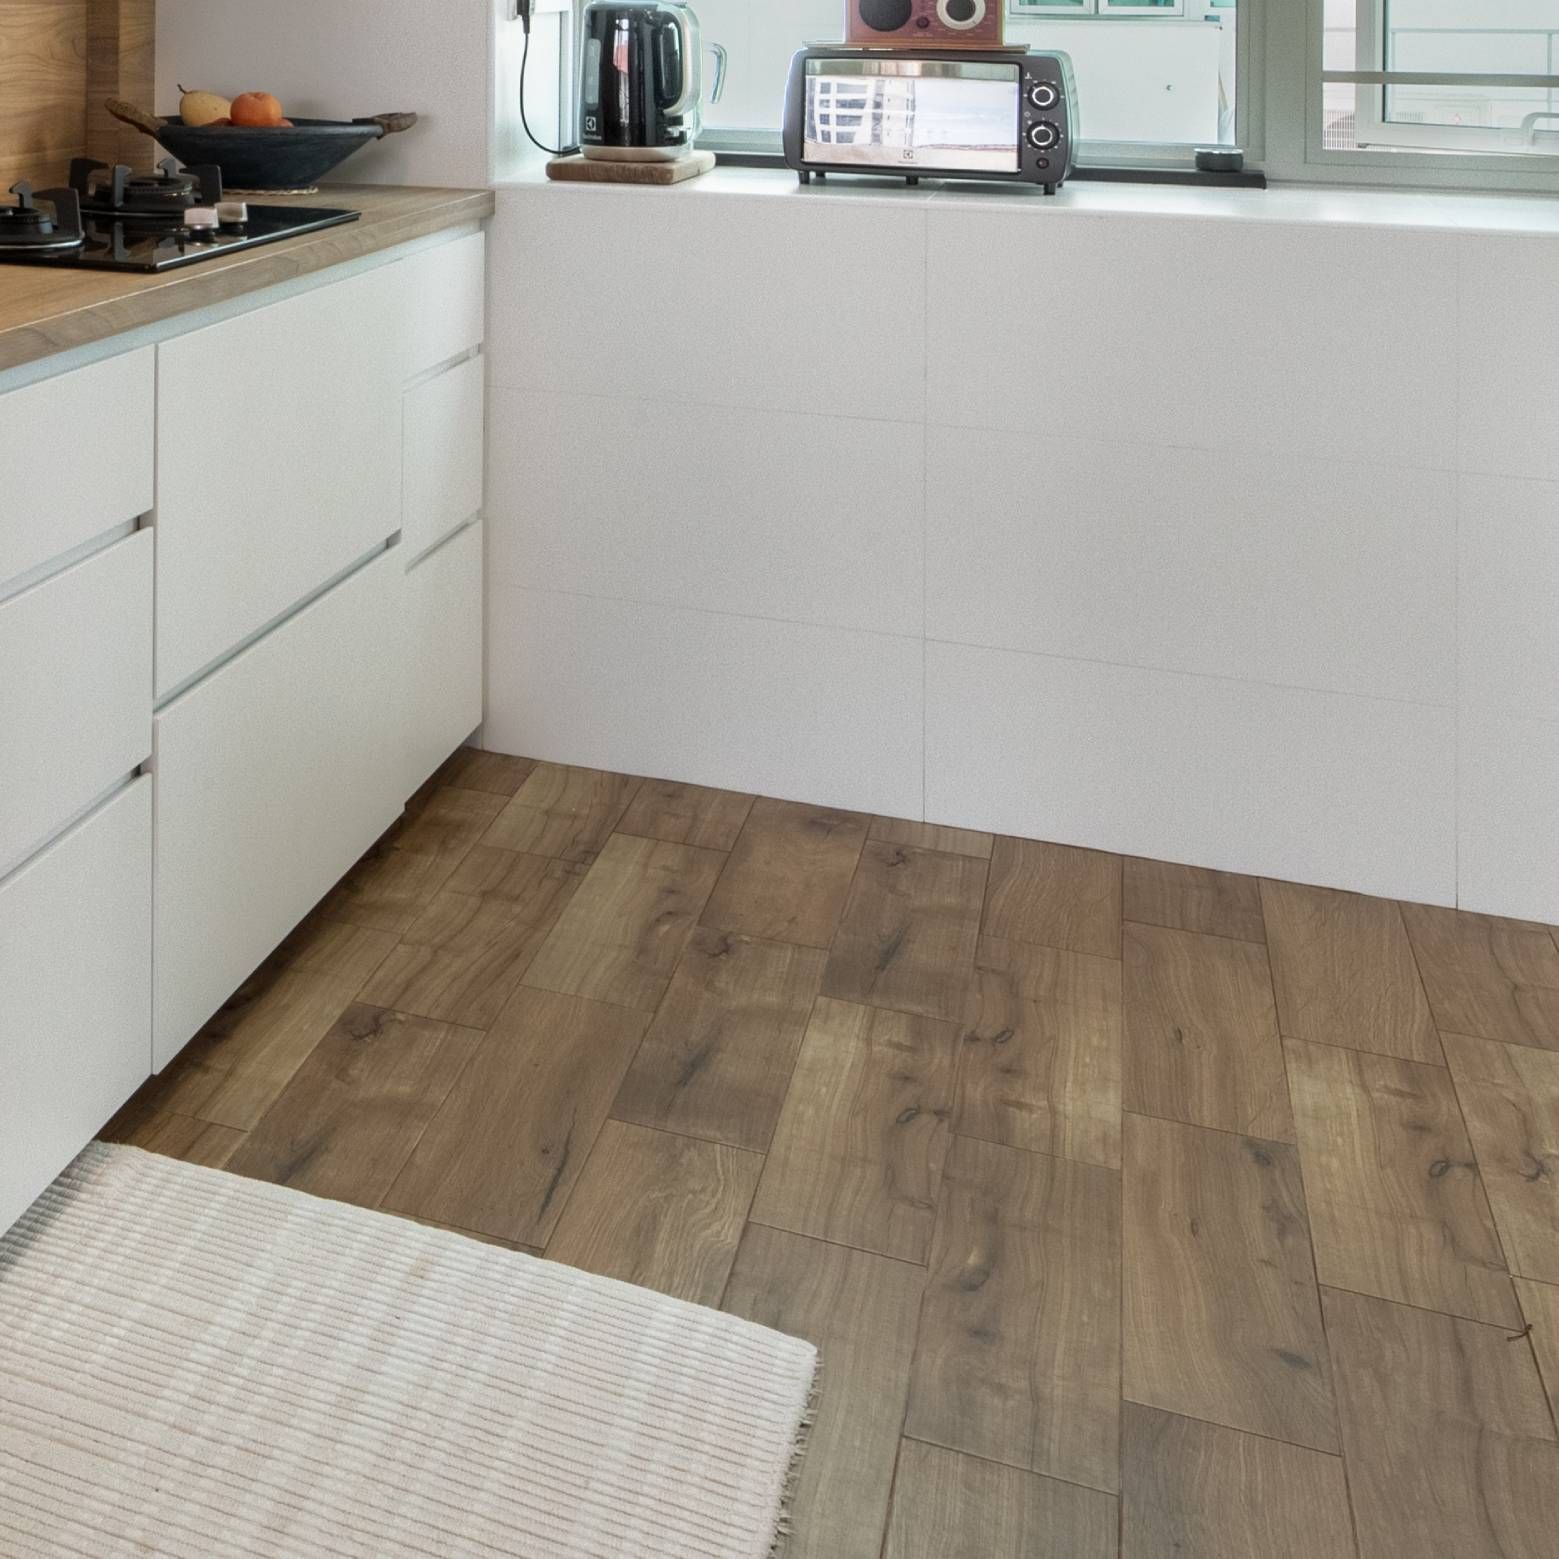 Modern Brown Flooring Tiles Design For Kitchens